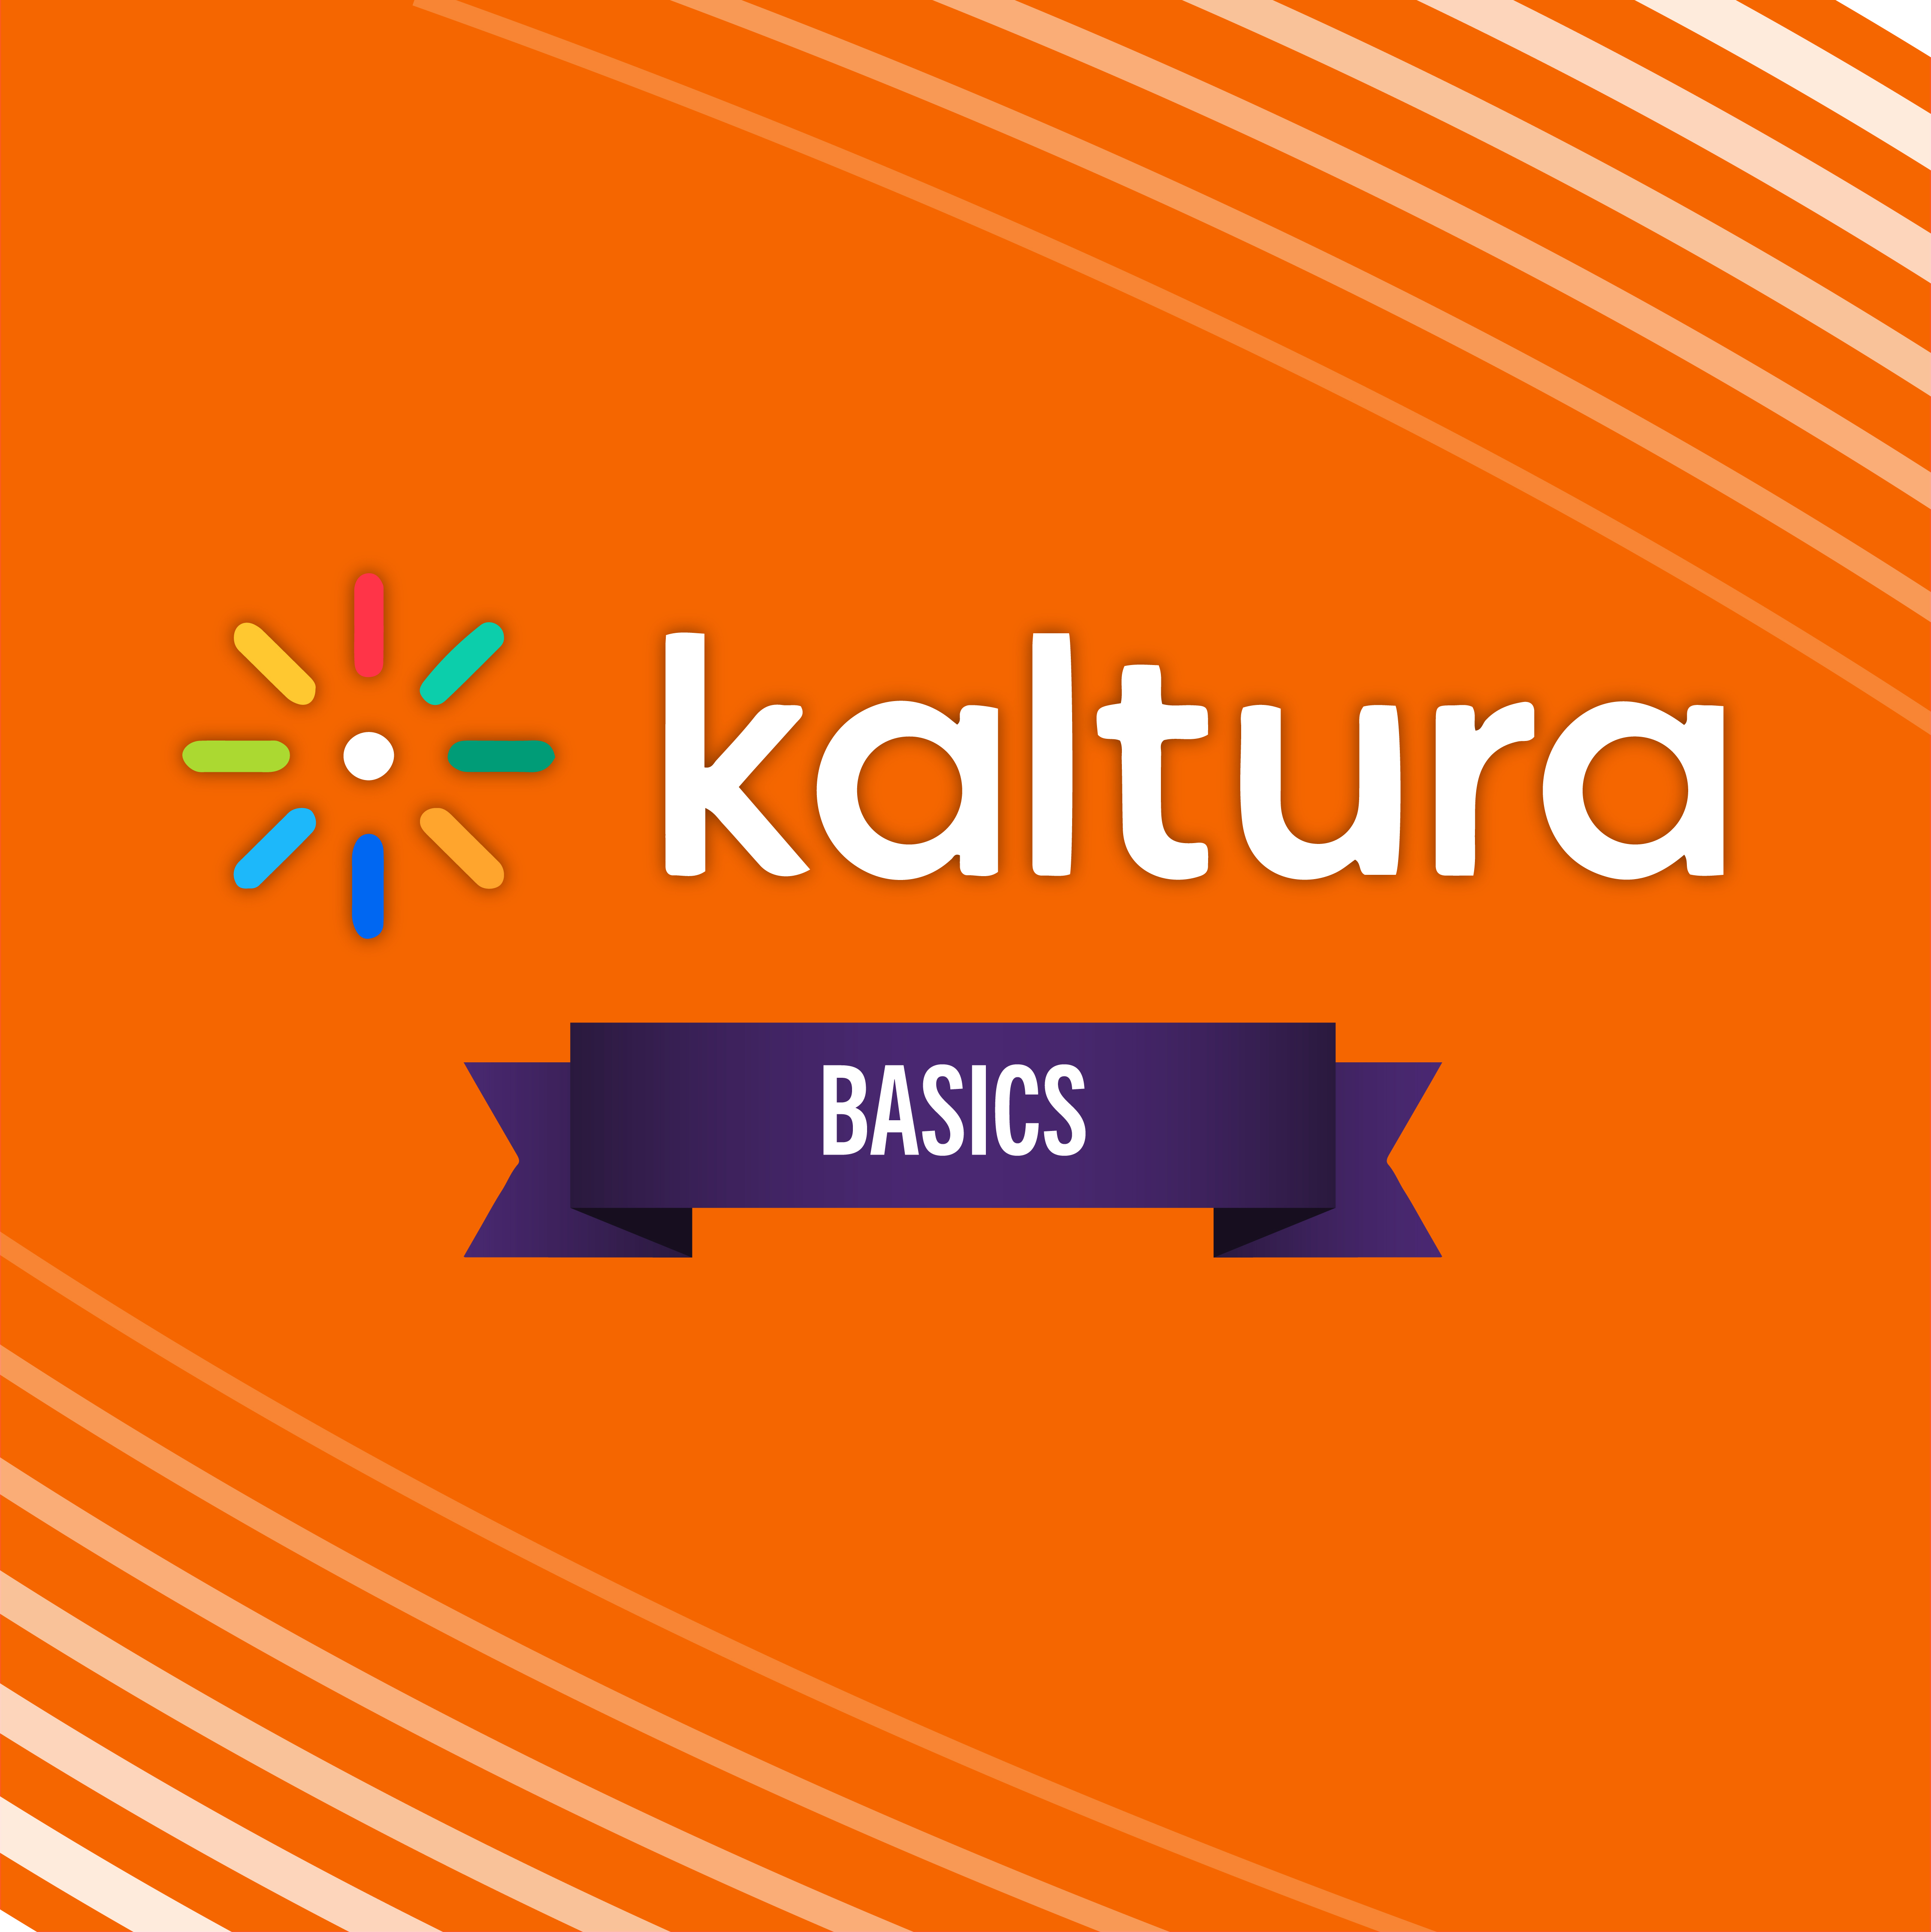 Kaltura Logo with Banner reading "Basics"